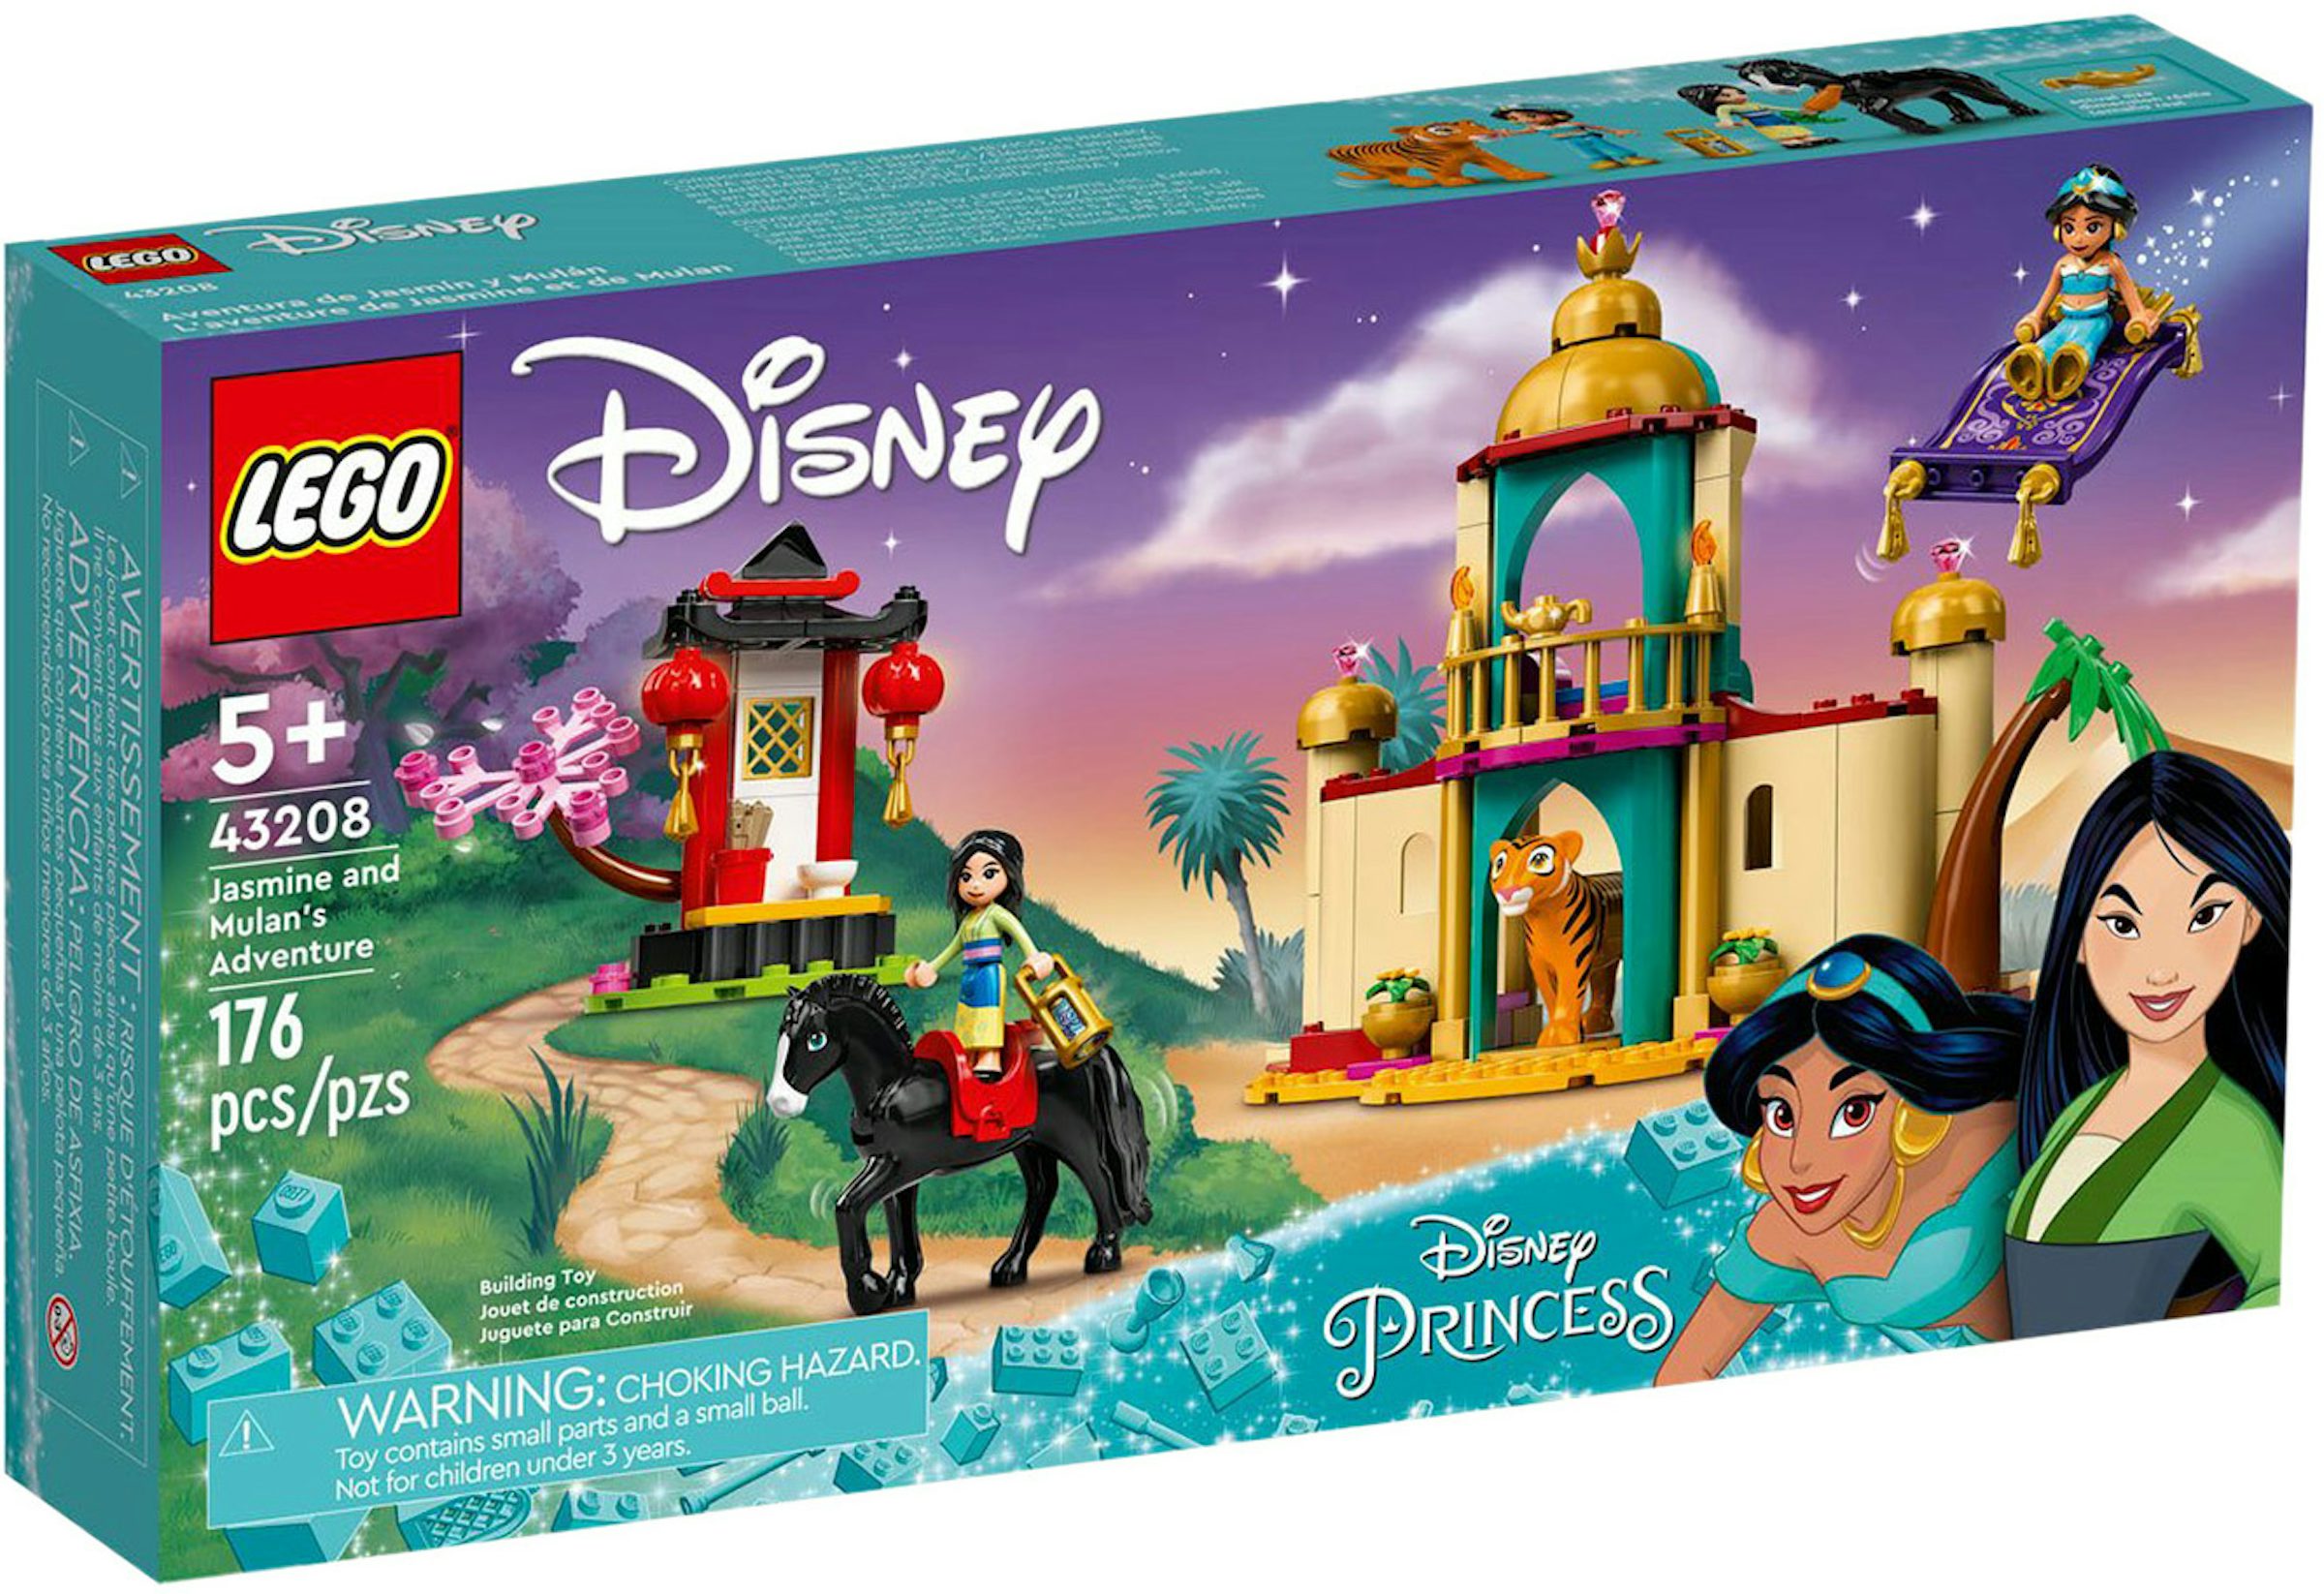 https://images.stockx.com/images/LEGO-Disney-Princess-Jasmine-and-Mulans-Adventure-Set-43208.jpg?fit=fill&bg=FFFFFF&w=1200&h=857&fm=jpg&auto=compress&dpr=2&trim=color&updated_at=1641933130&q=60